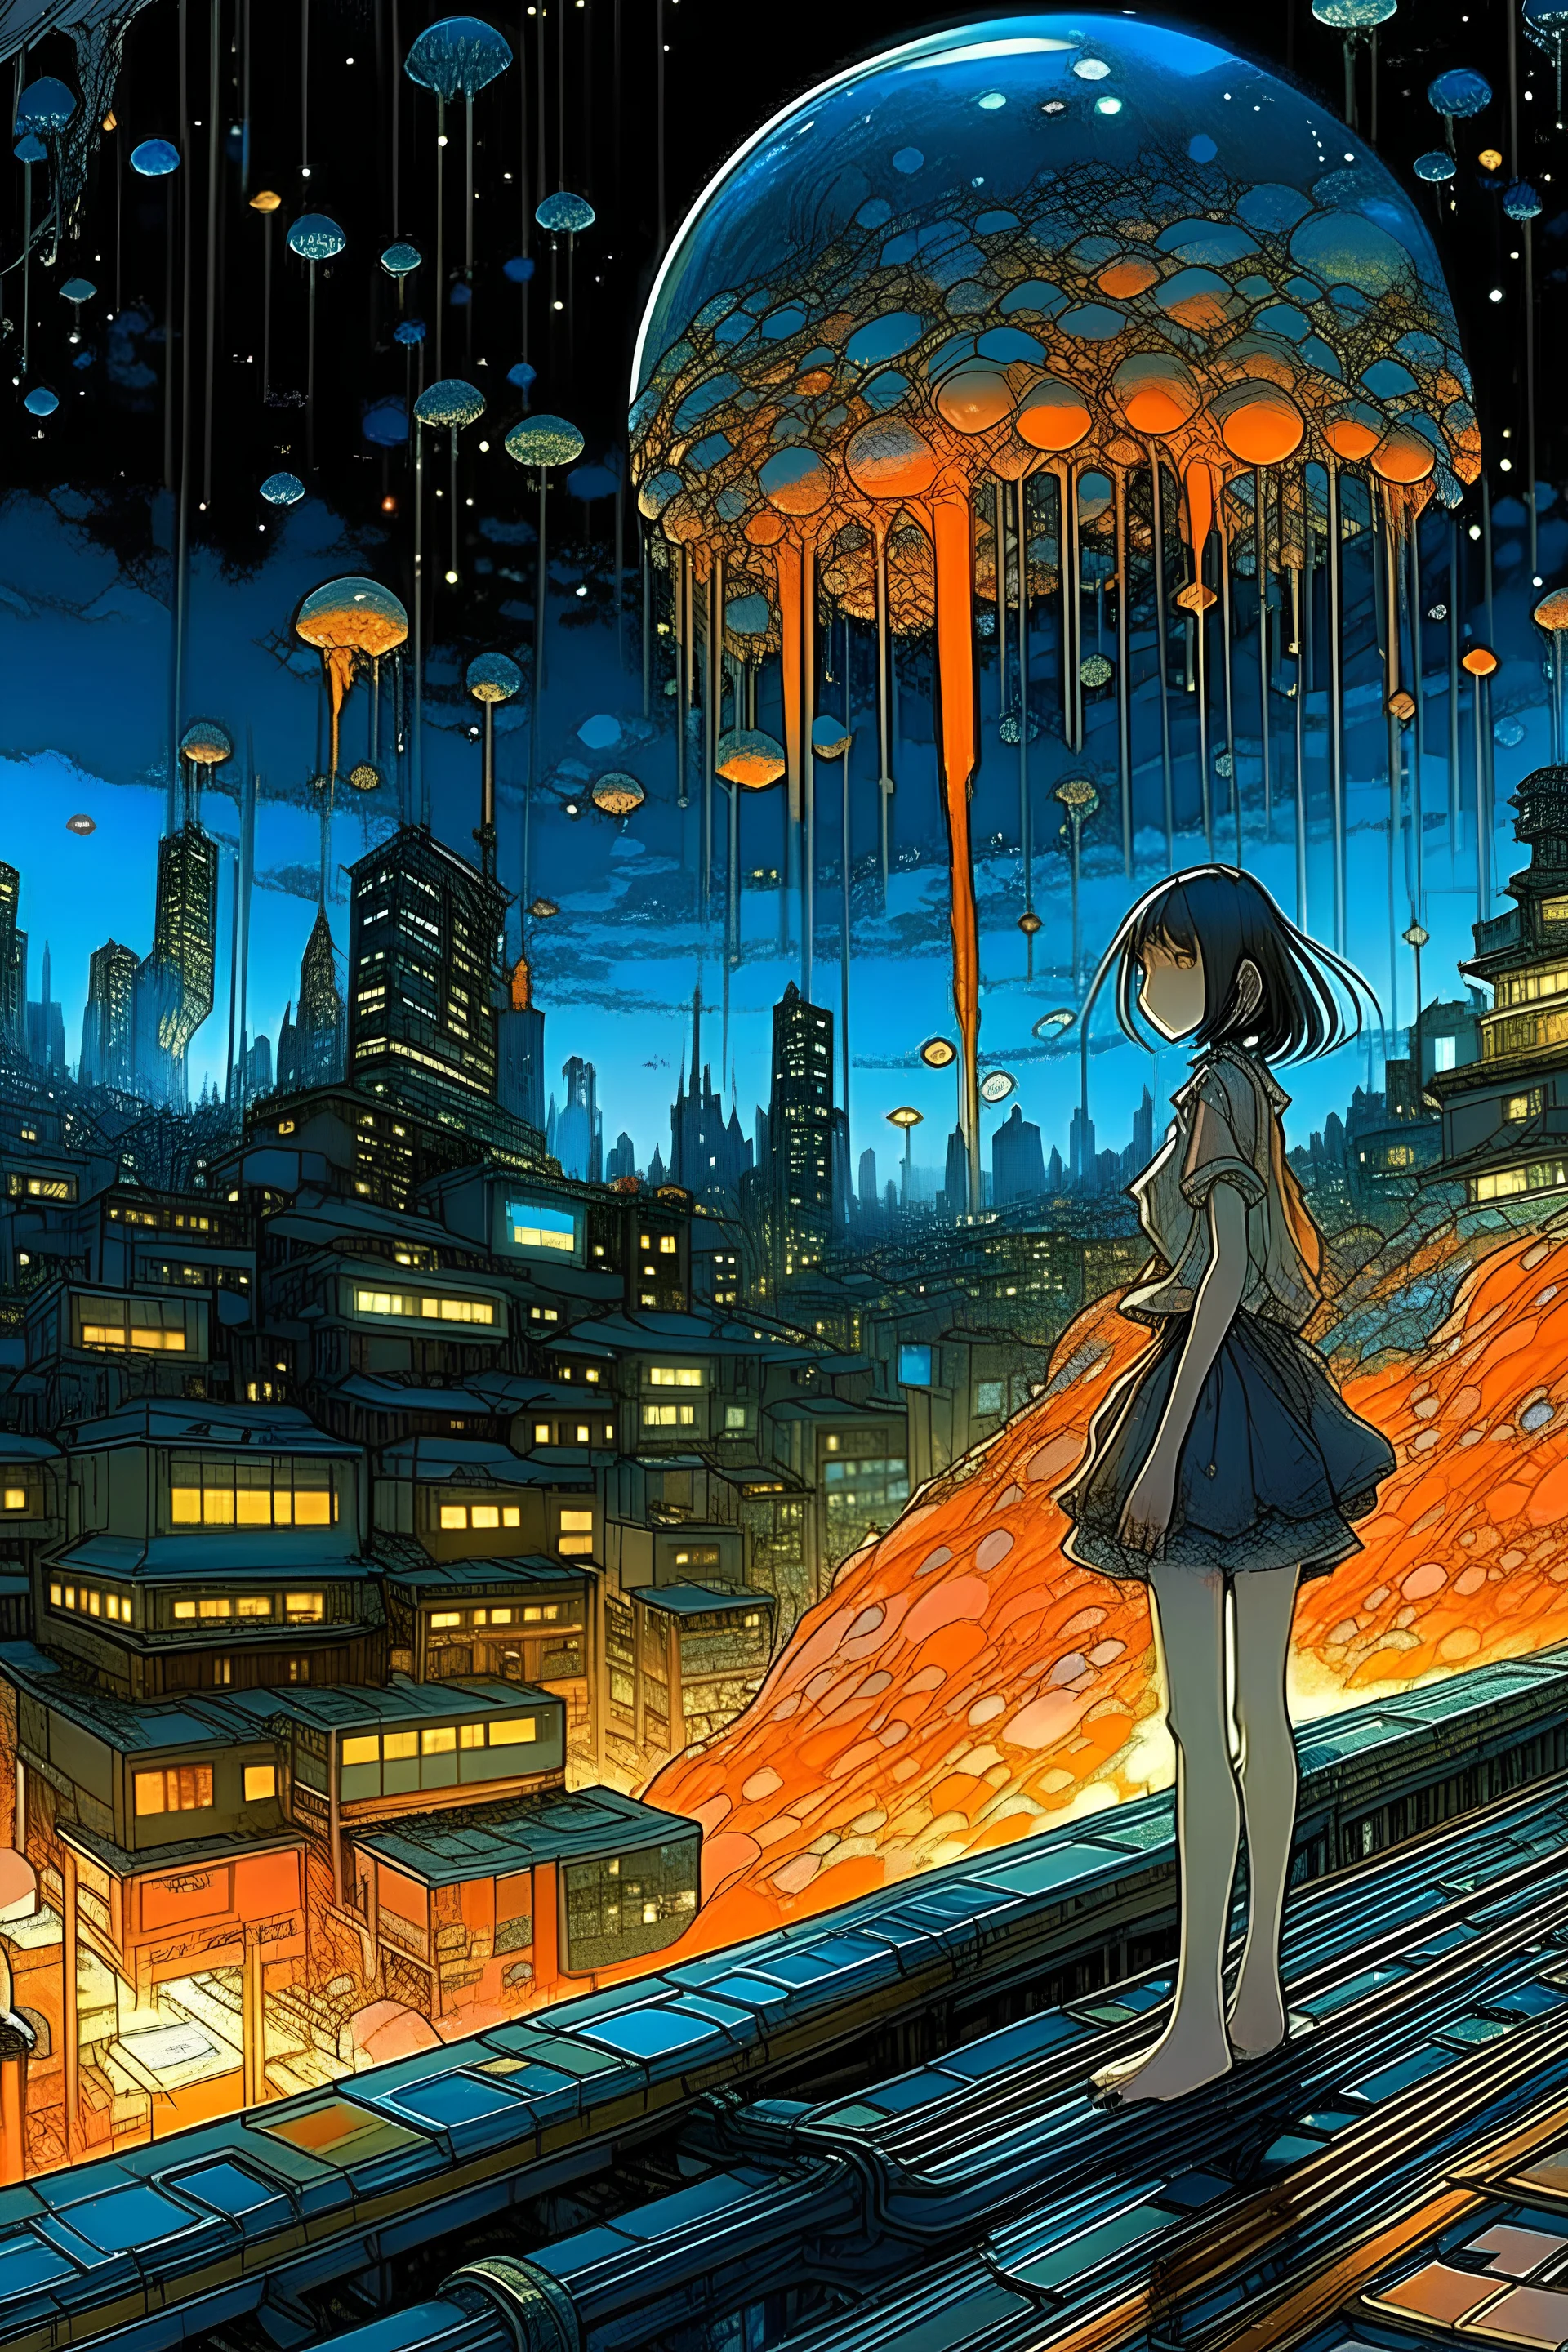 Keiko Alexbest.anime - Illustrations ART street